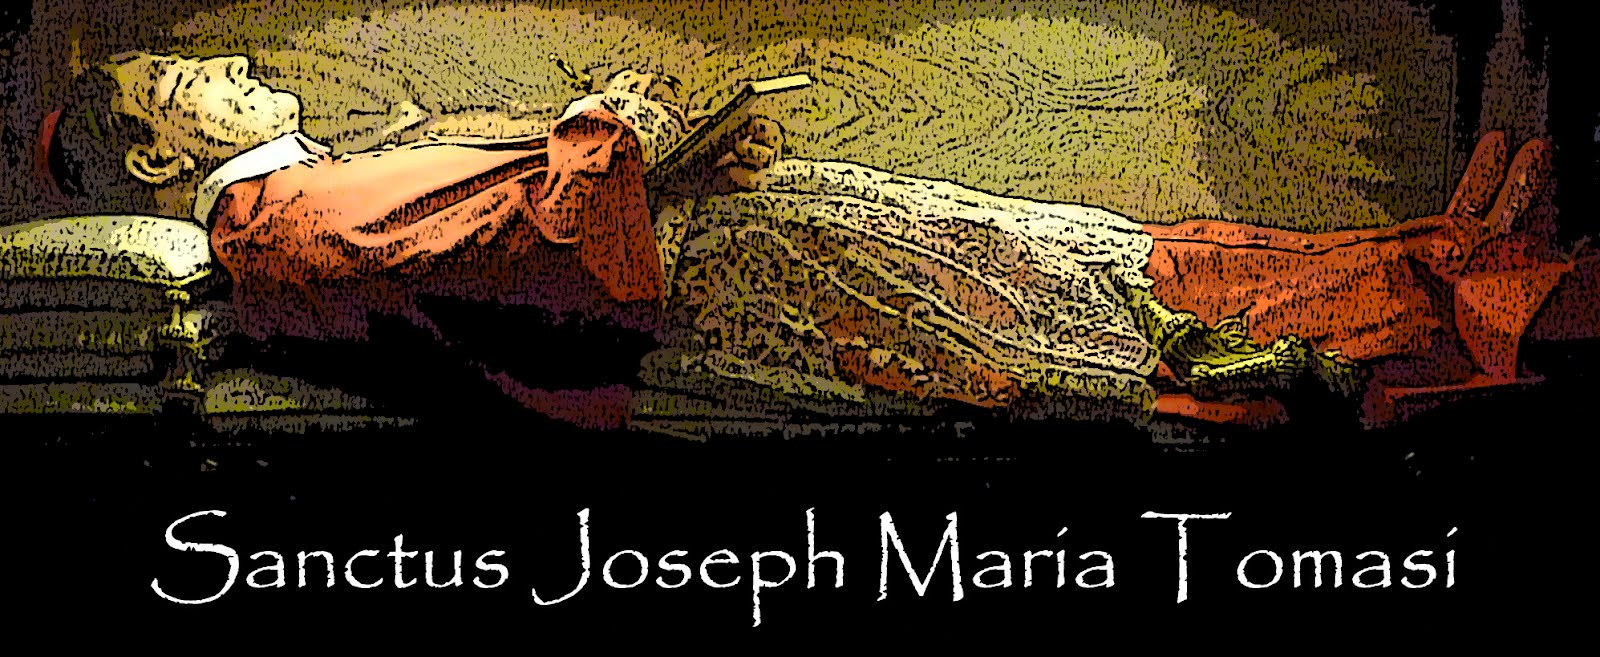 Sanctus Joseph Maria Cardinalis Tomasi